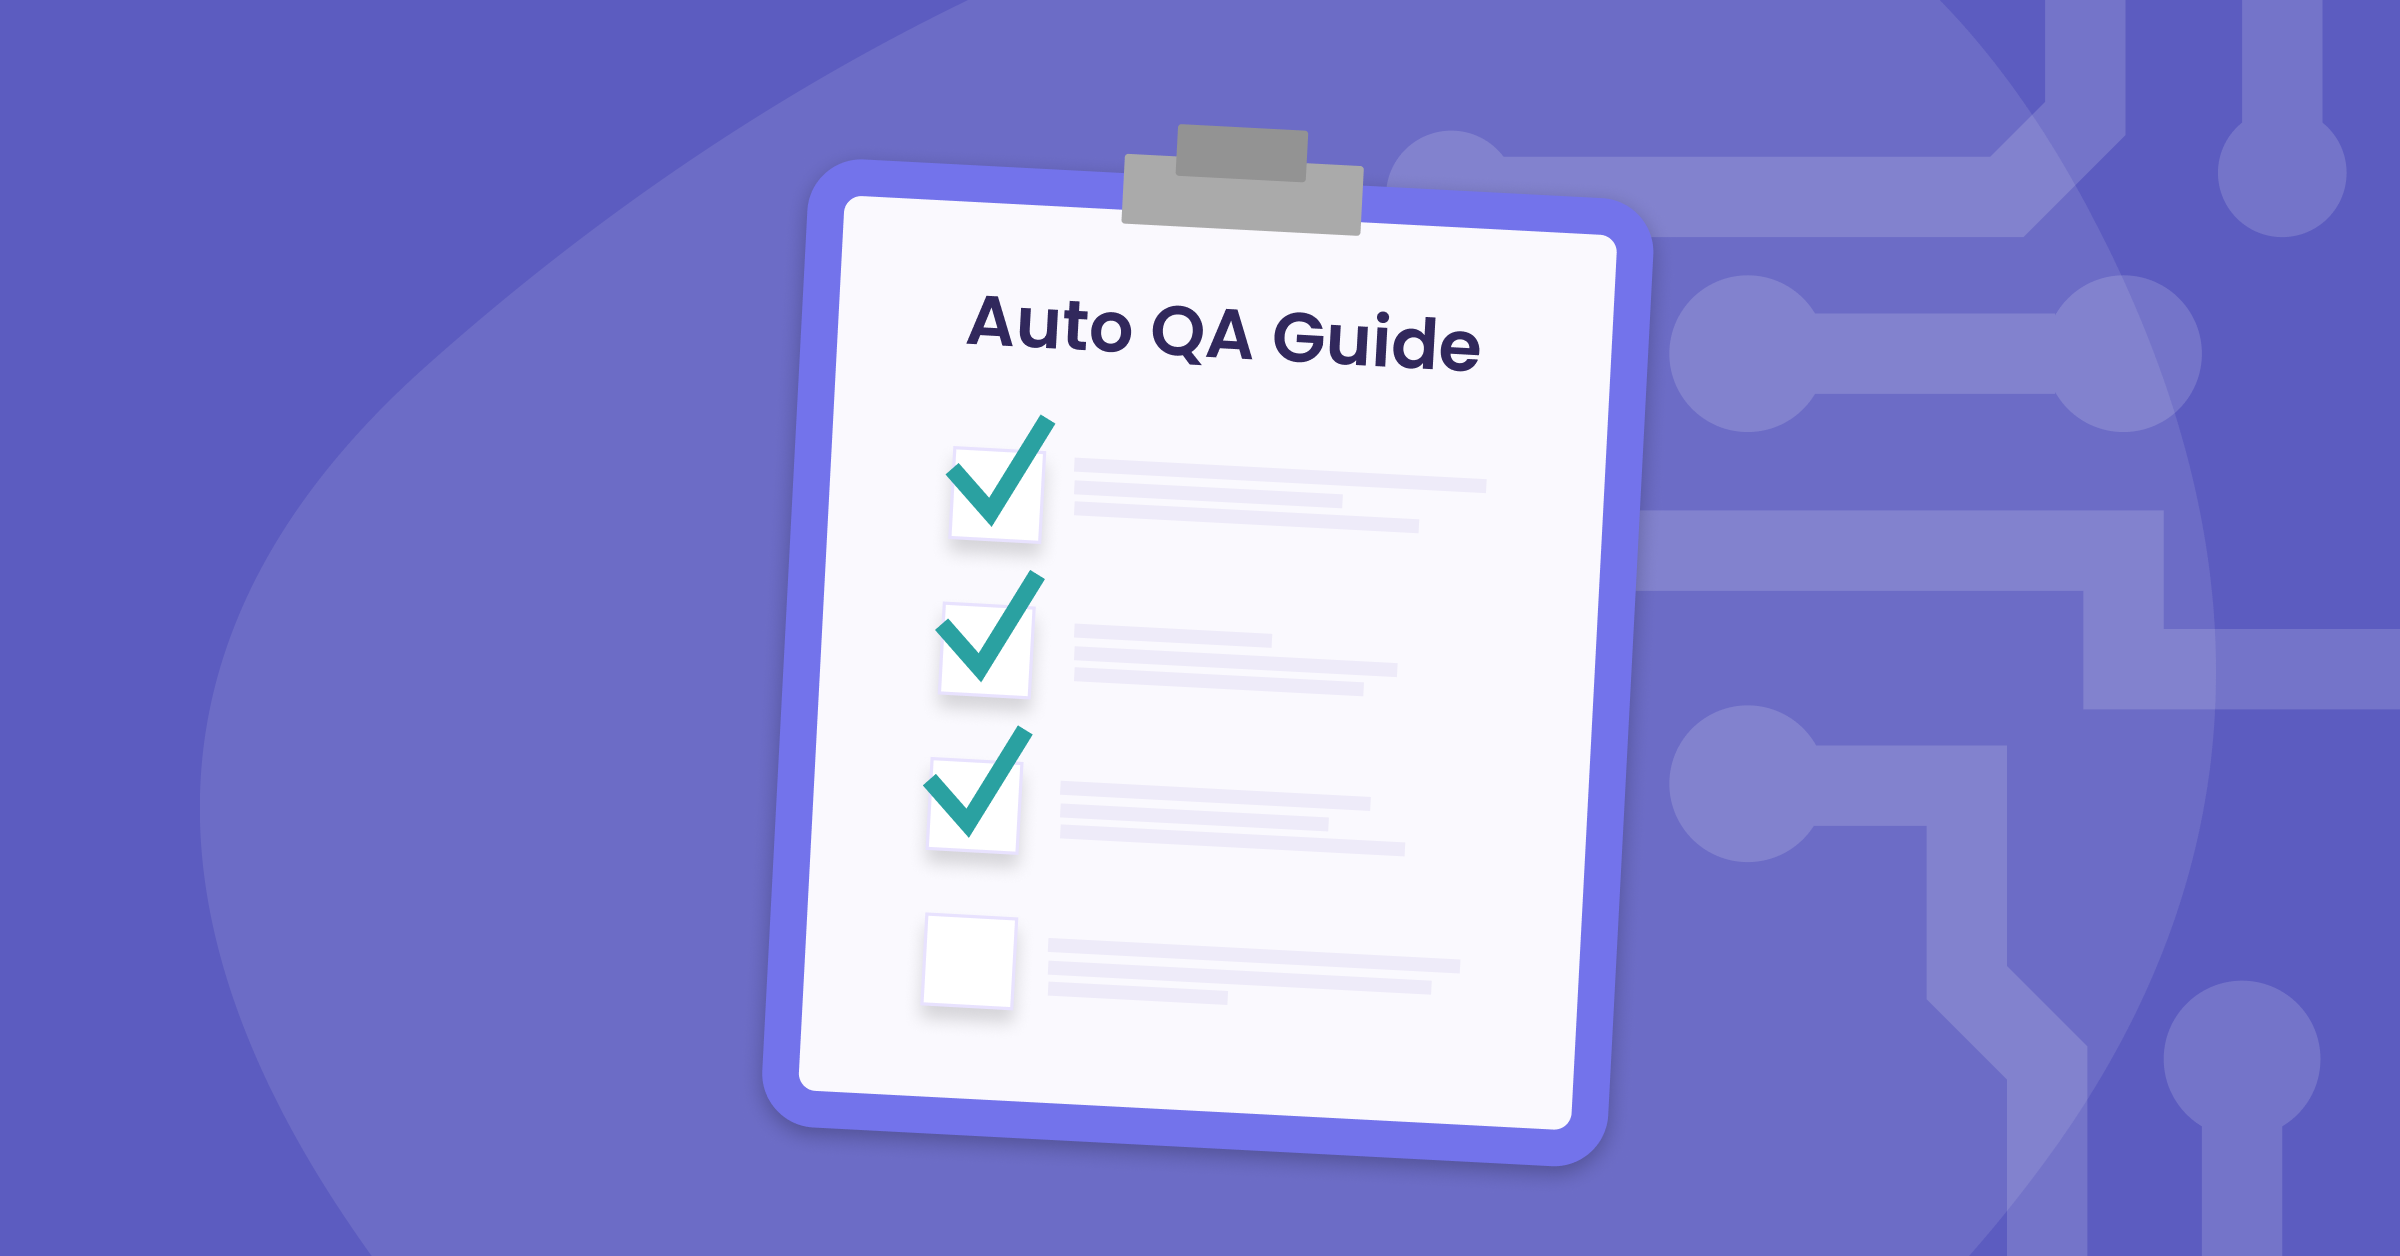 Auto QA post featured image